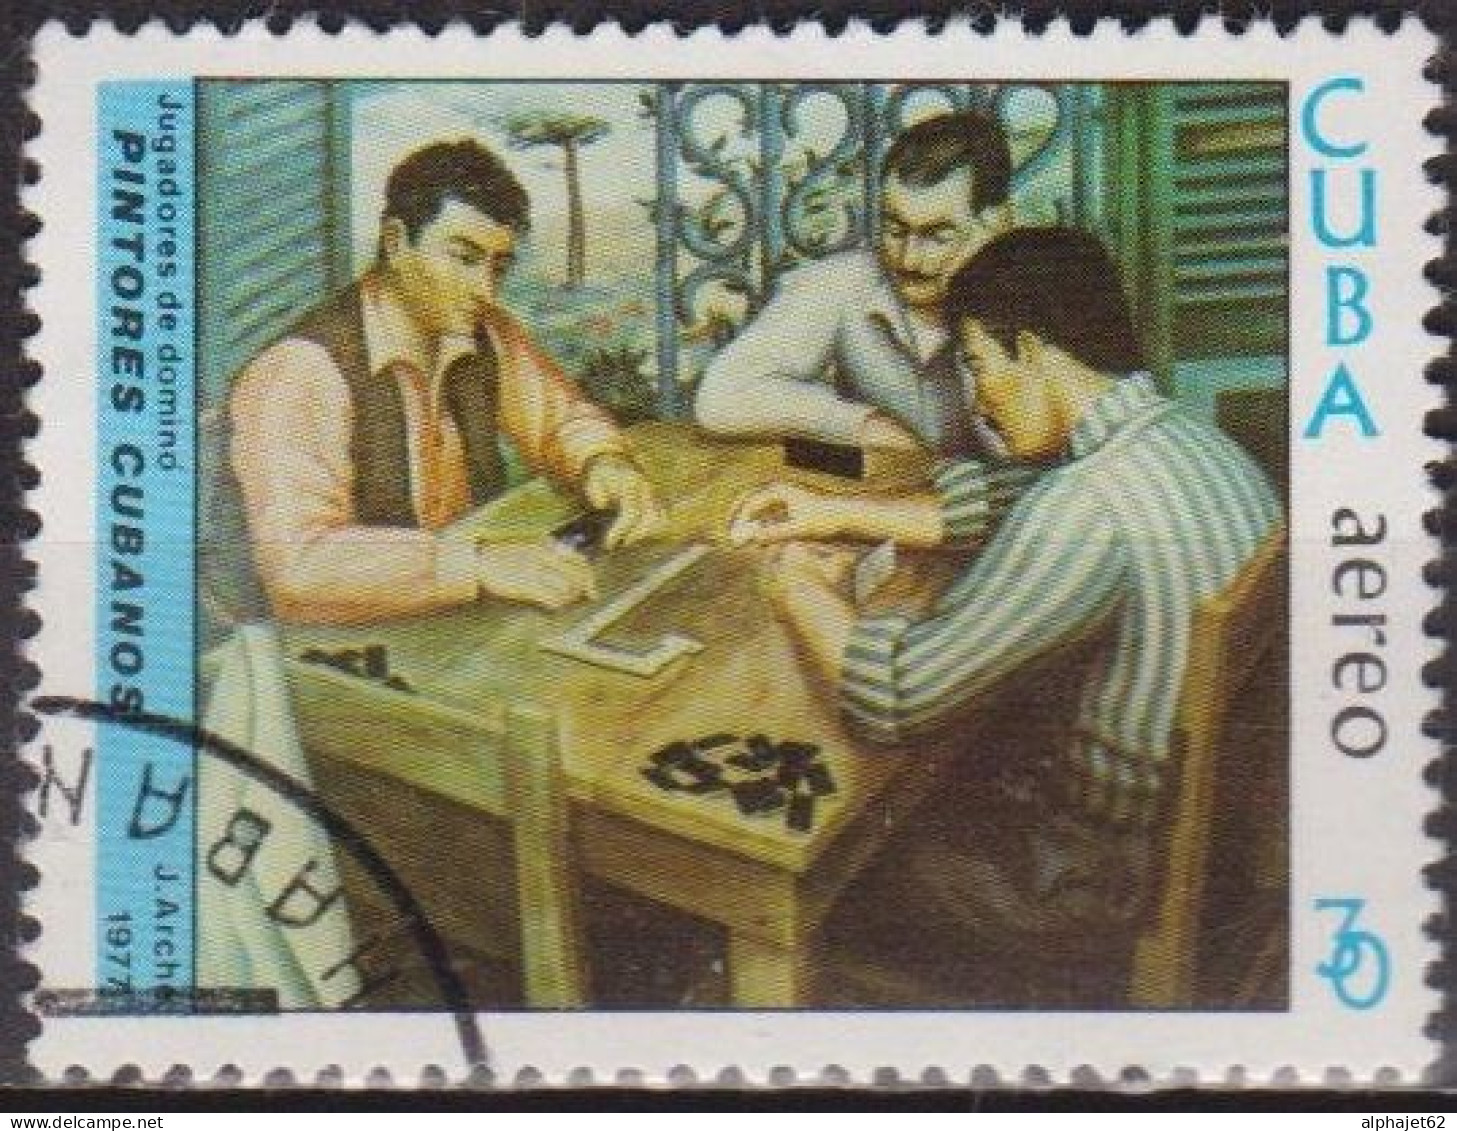 Art, Peinture - CUBA - Les Joueurs De Domino - N° 261 - 1977 - Posta Aerea